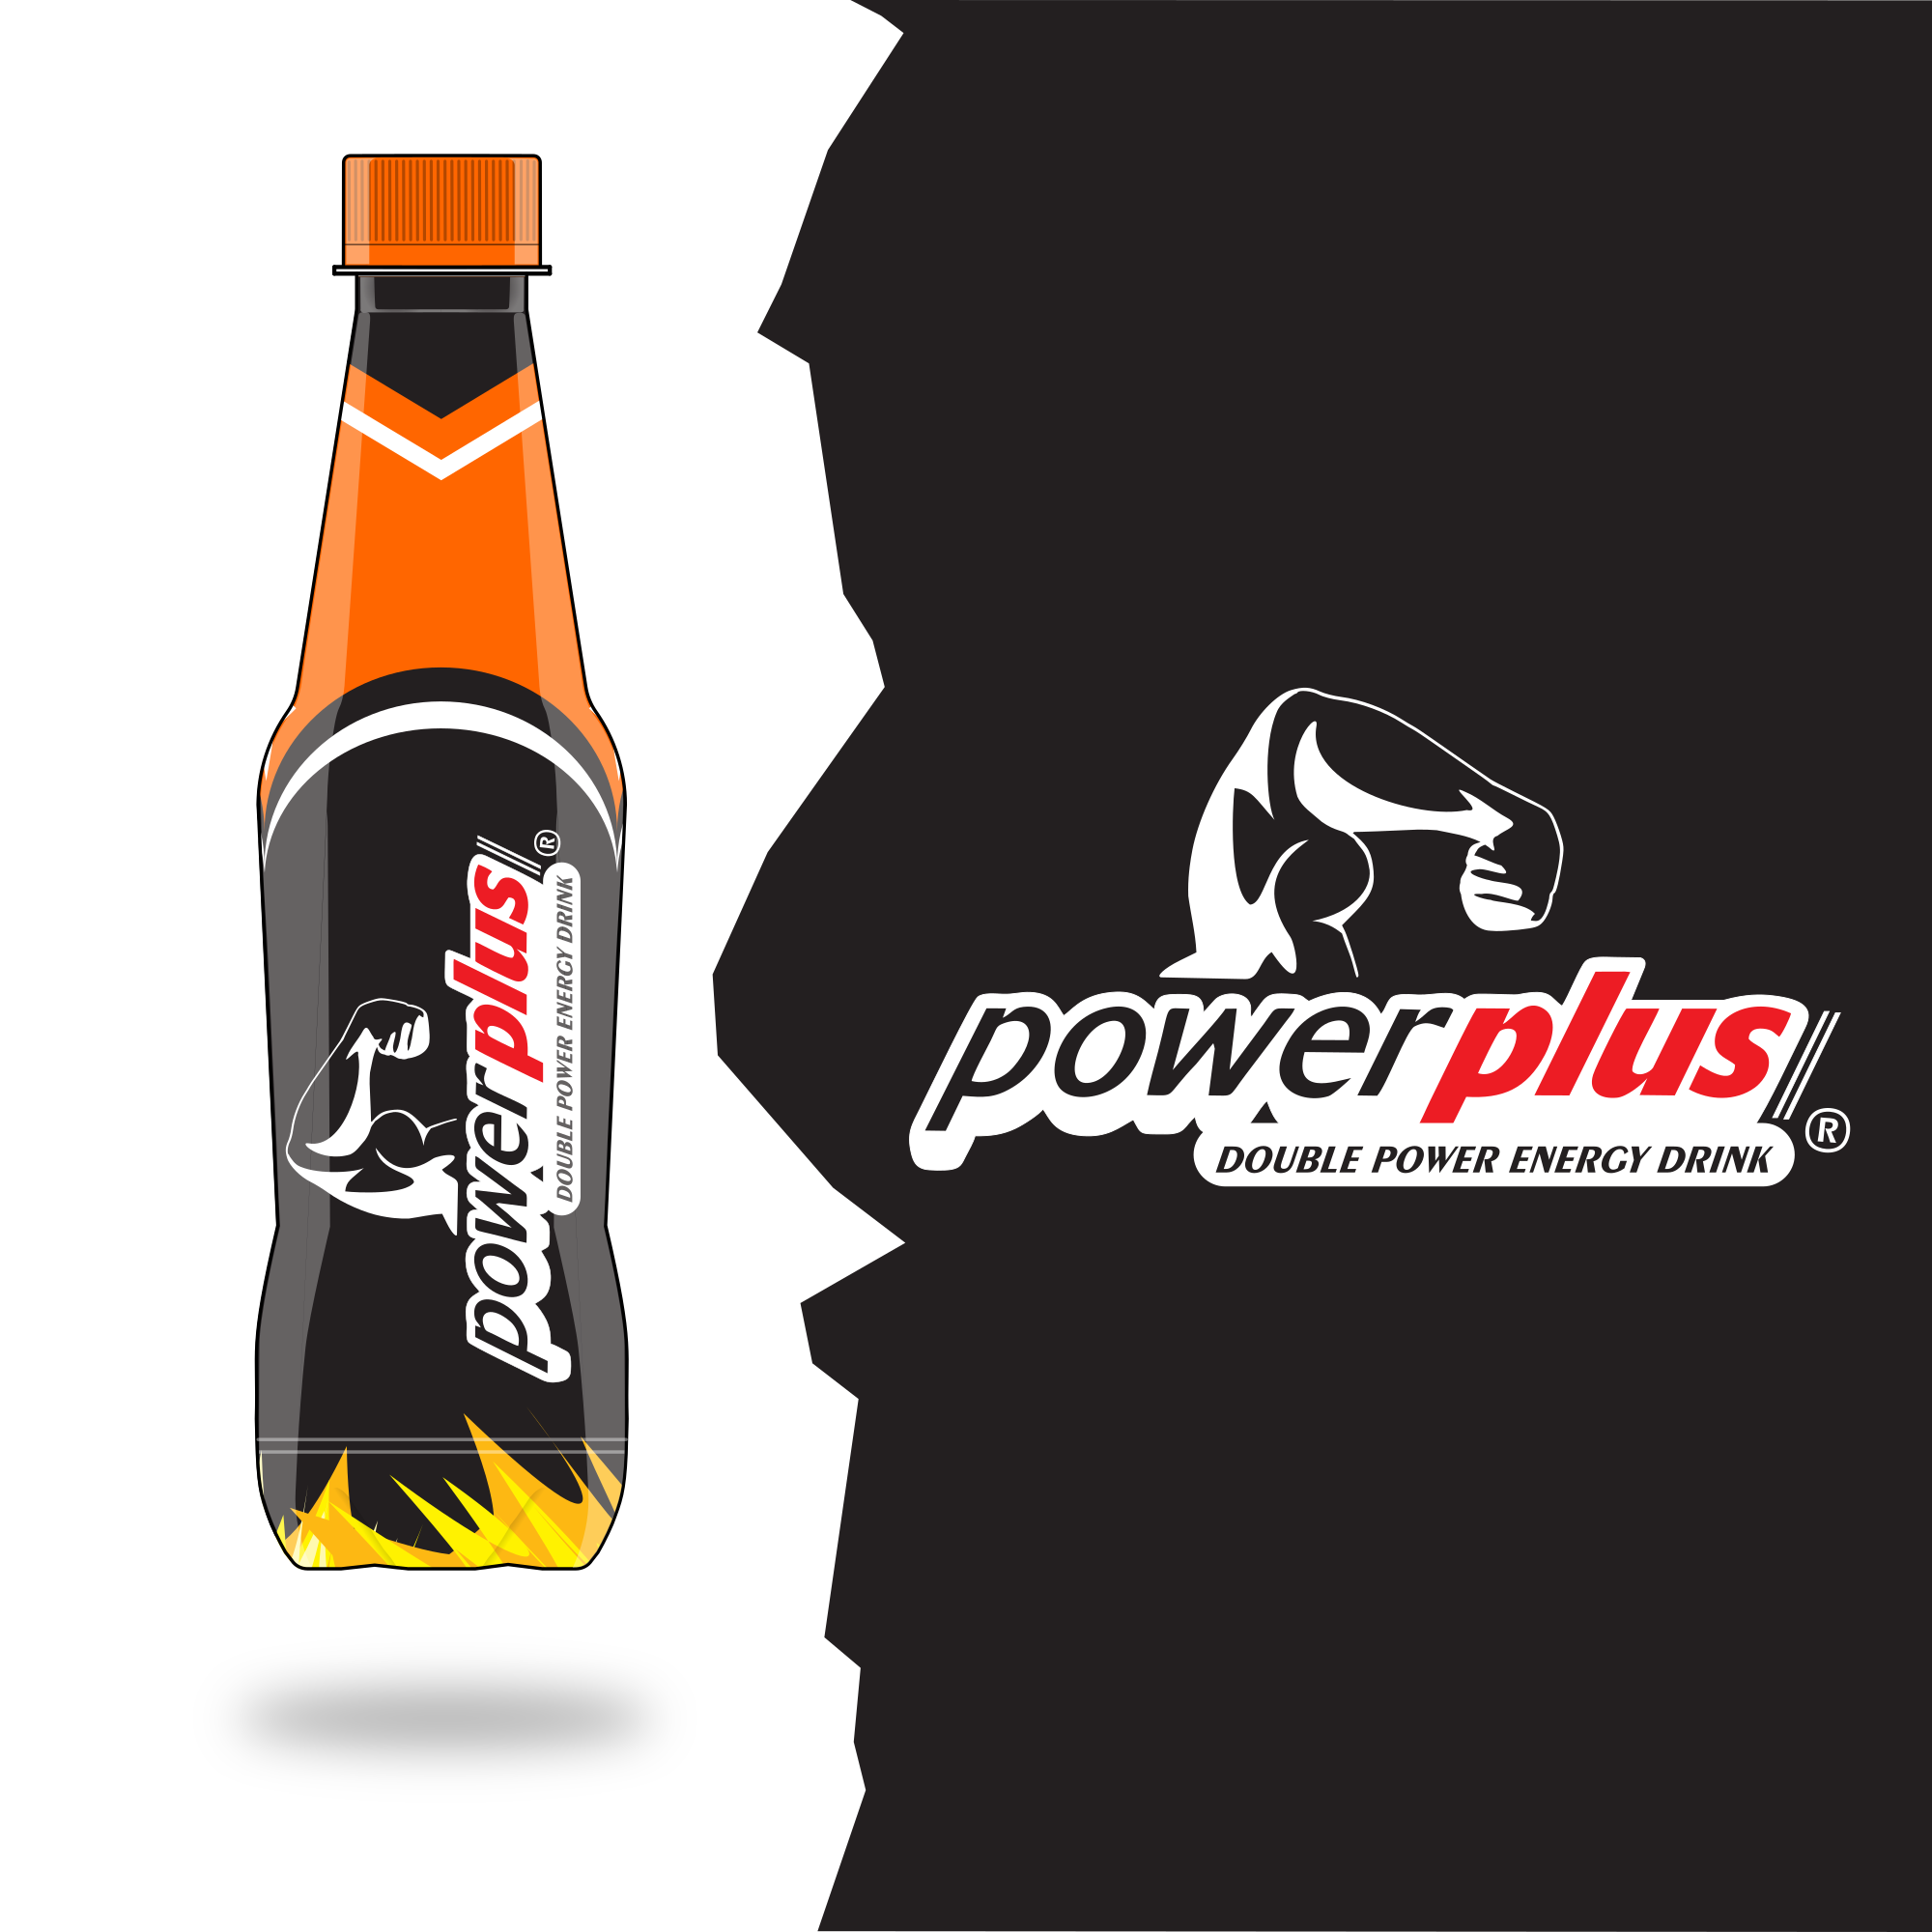 Powerplus Double Power Energy Drink